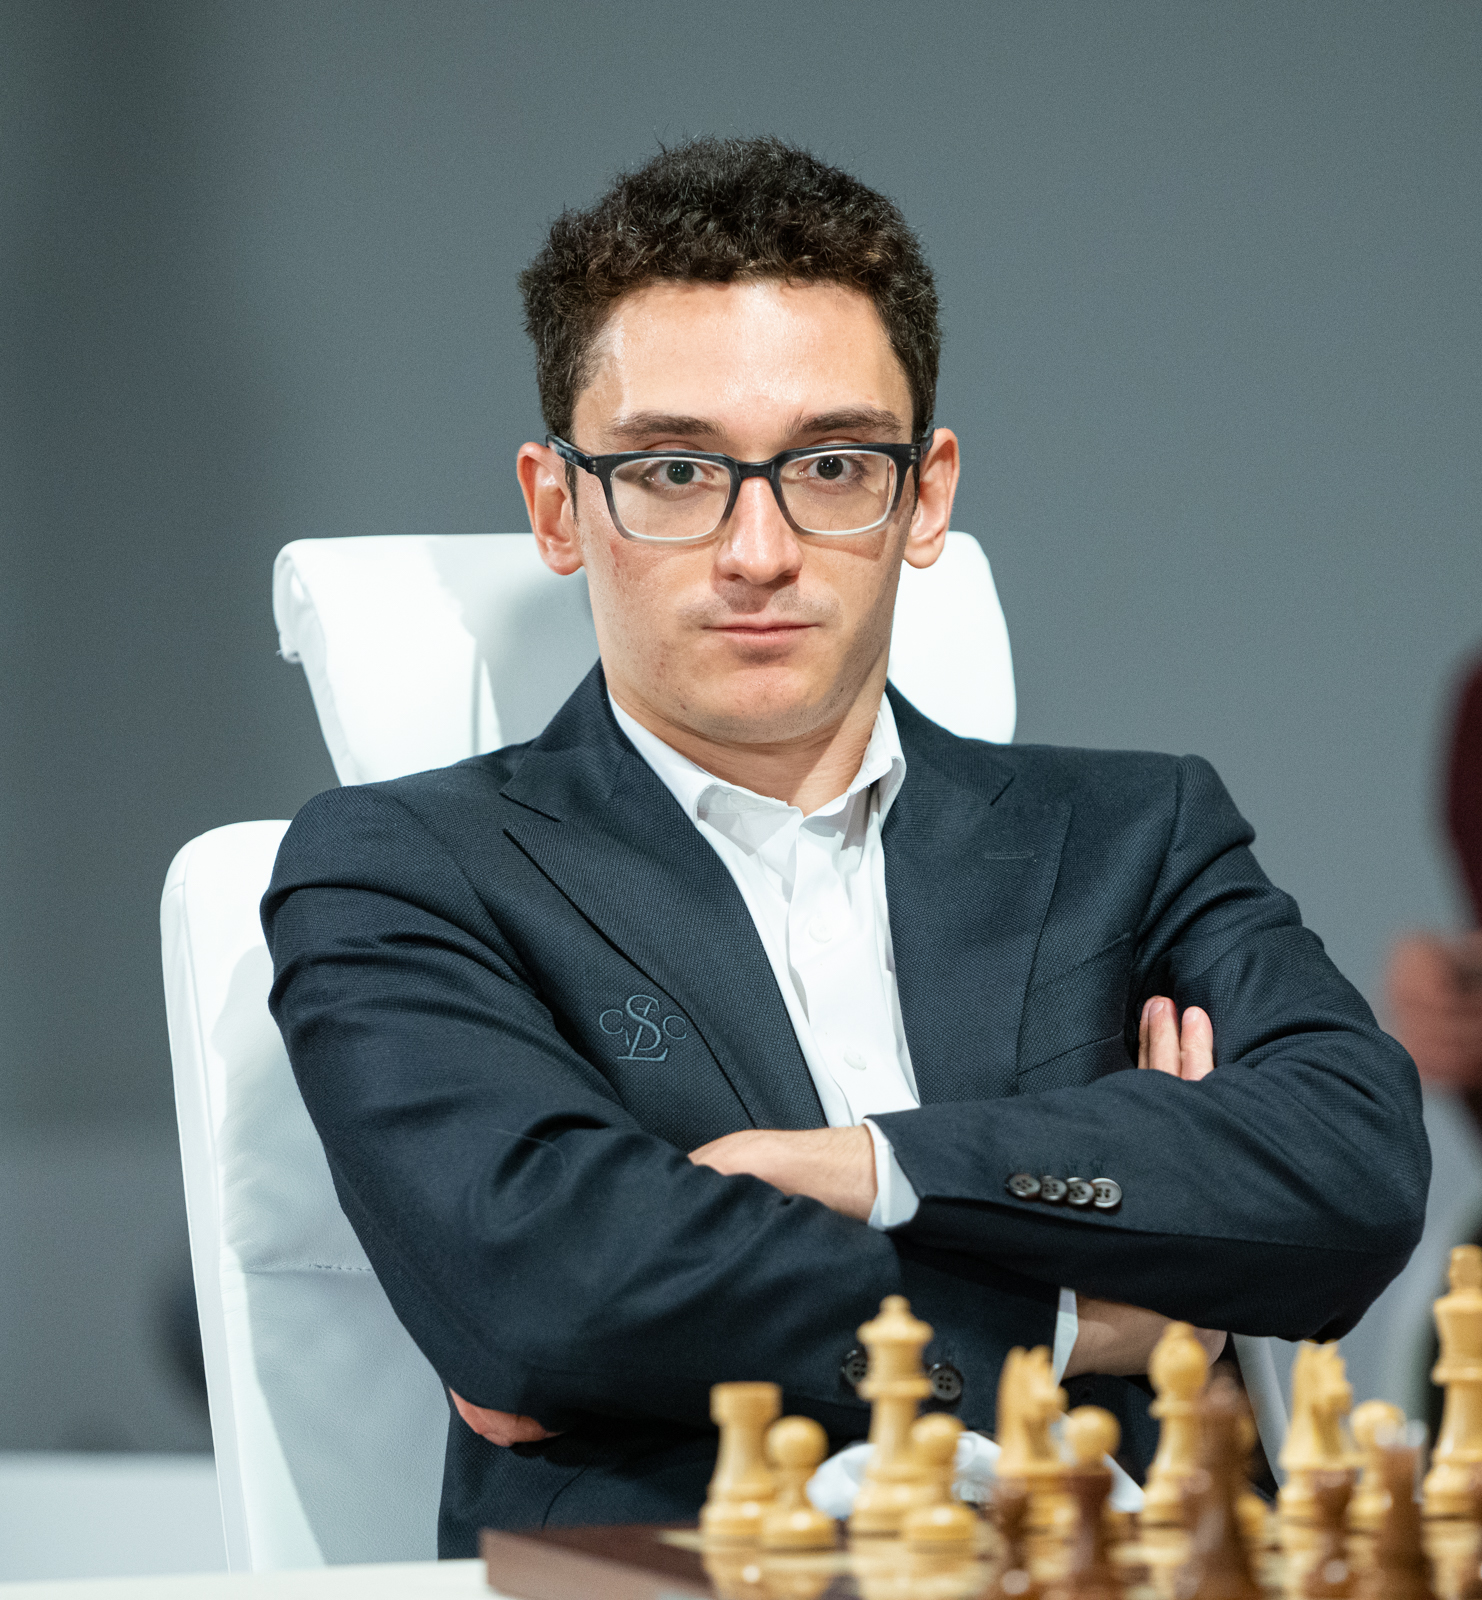 Fabiano Caruana  Wiki/Bio, FIDE rating, IQ, Instagram, Net worth